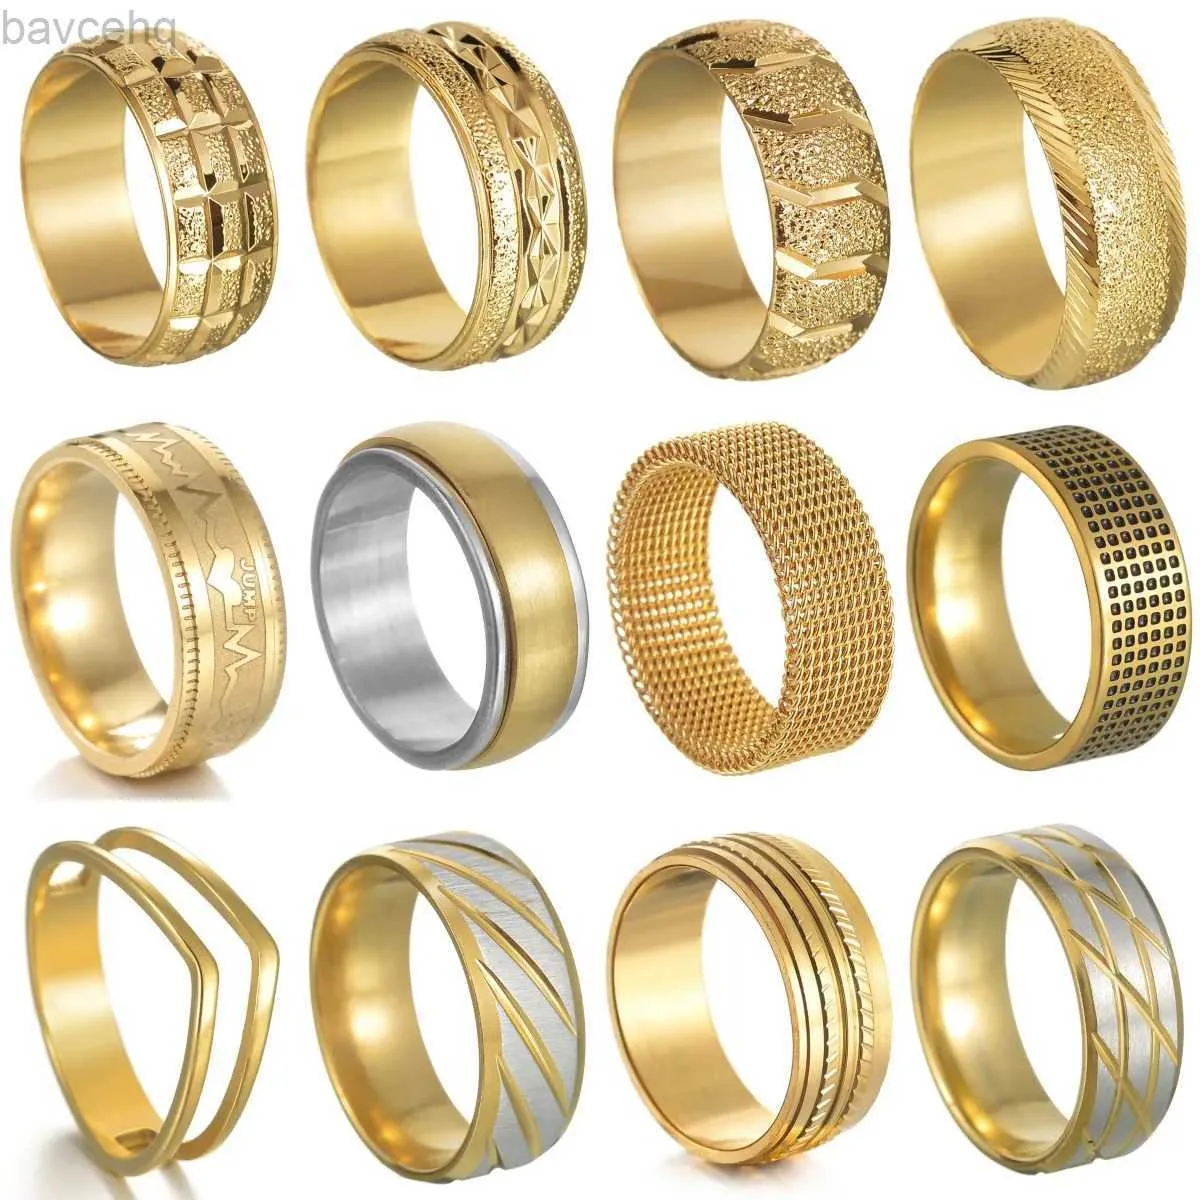 Anéis de casamento de alta qualidade, cor dourada, anel de casamento para mulheres, homens, casal, robusto, círculo geométrico, anel minimalista, joias, presente de dia dos namorados 24329